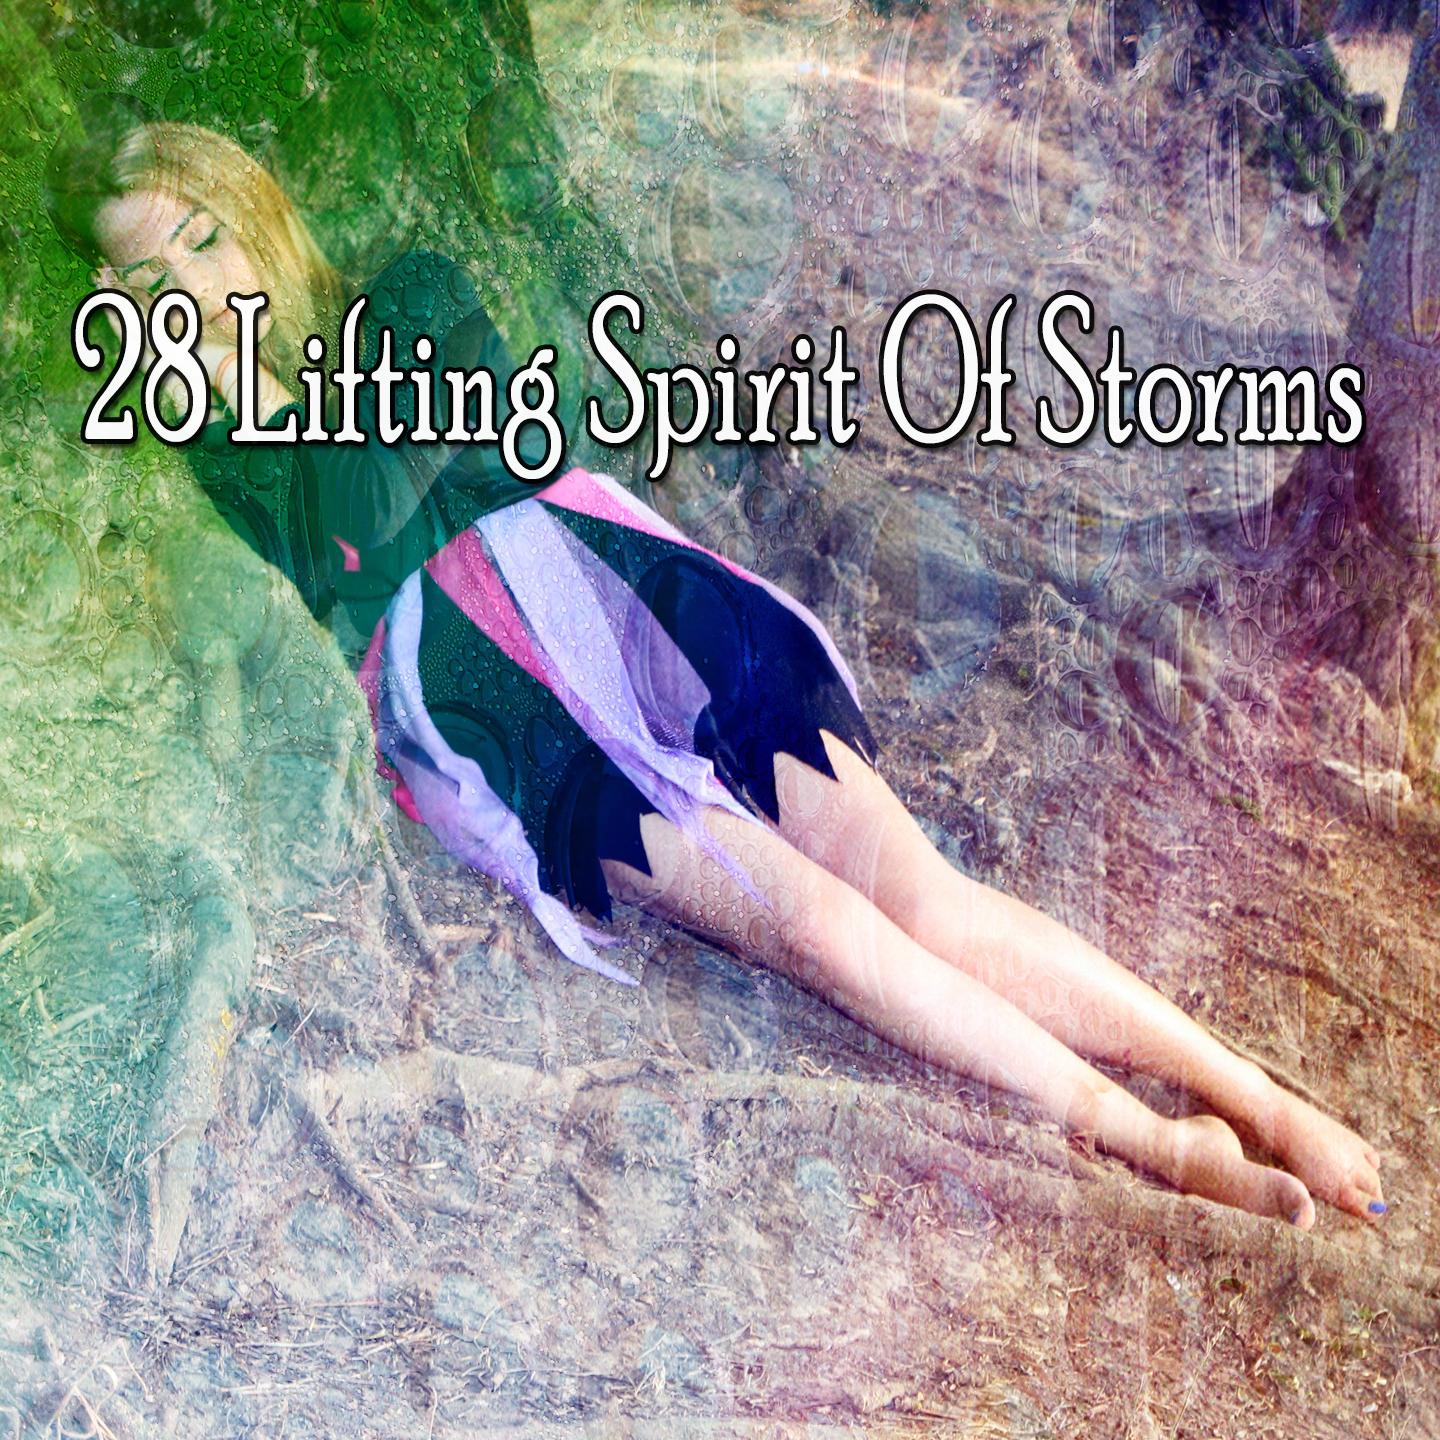 28 Lifting Spirit of Storms